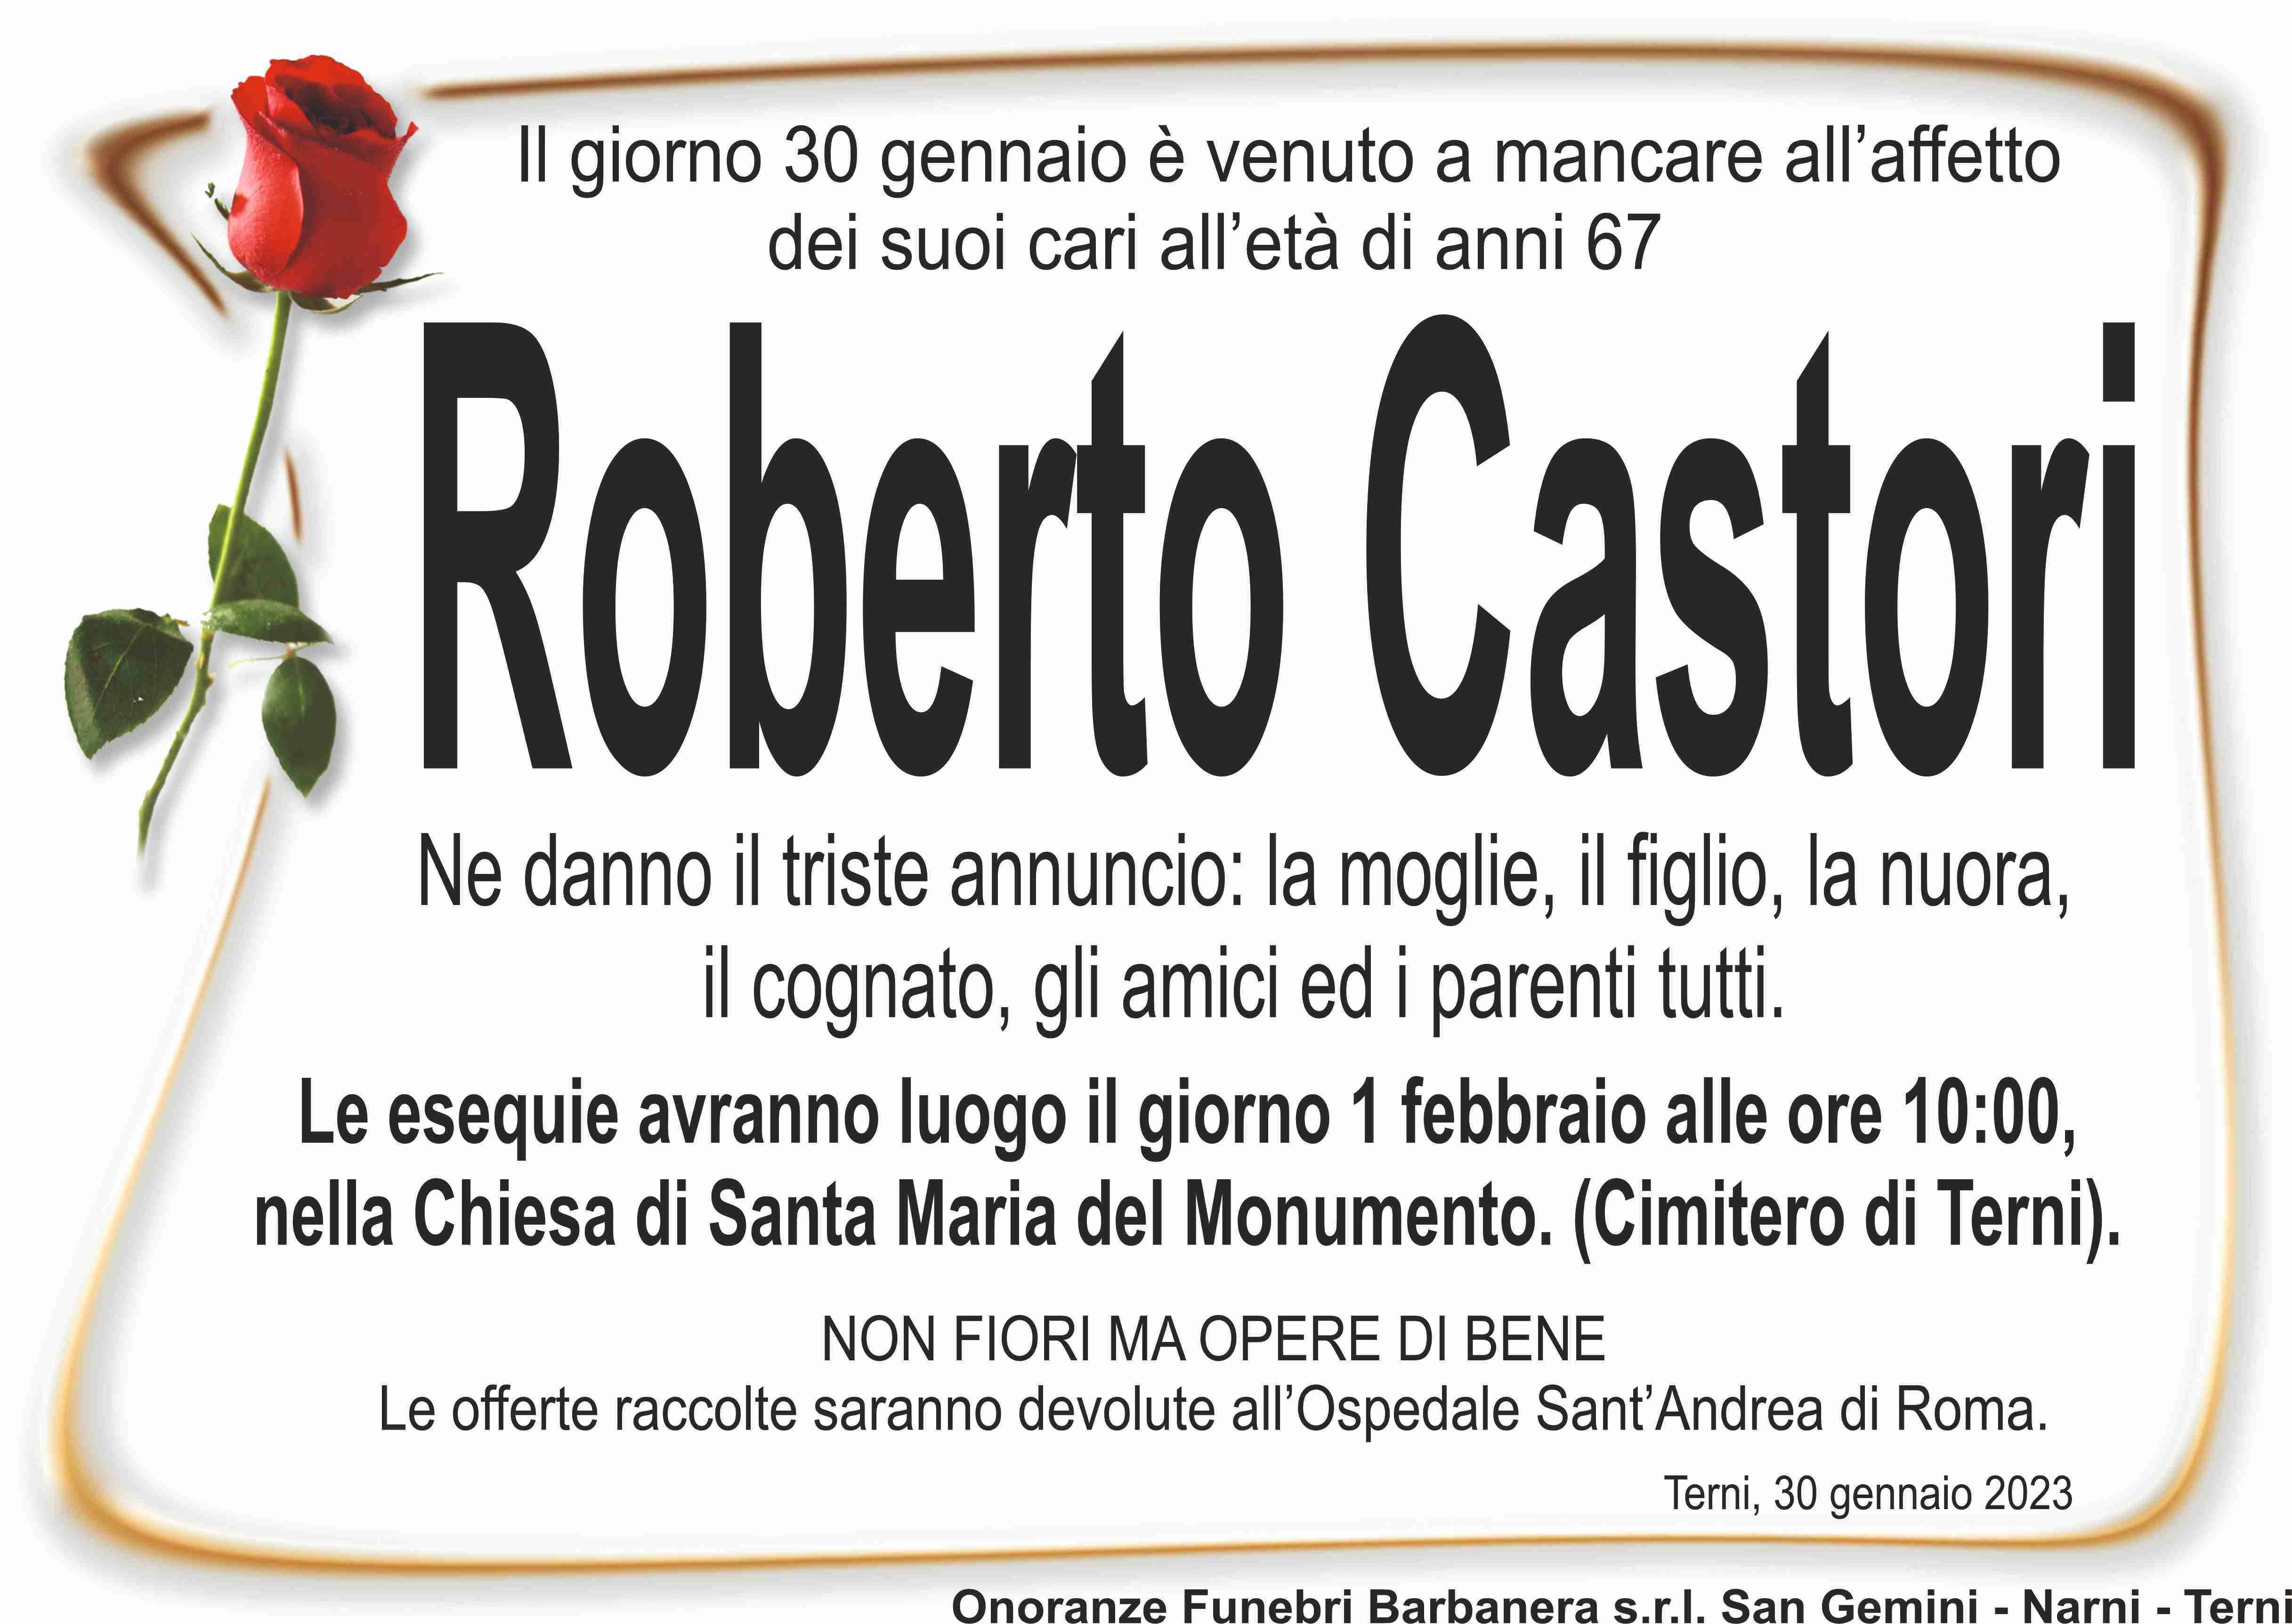 Roberto Castori